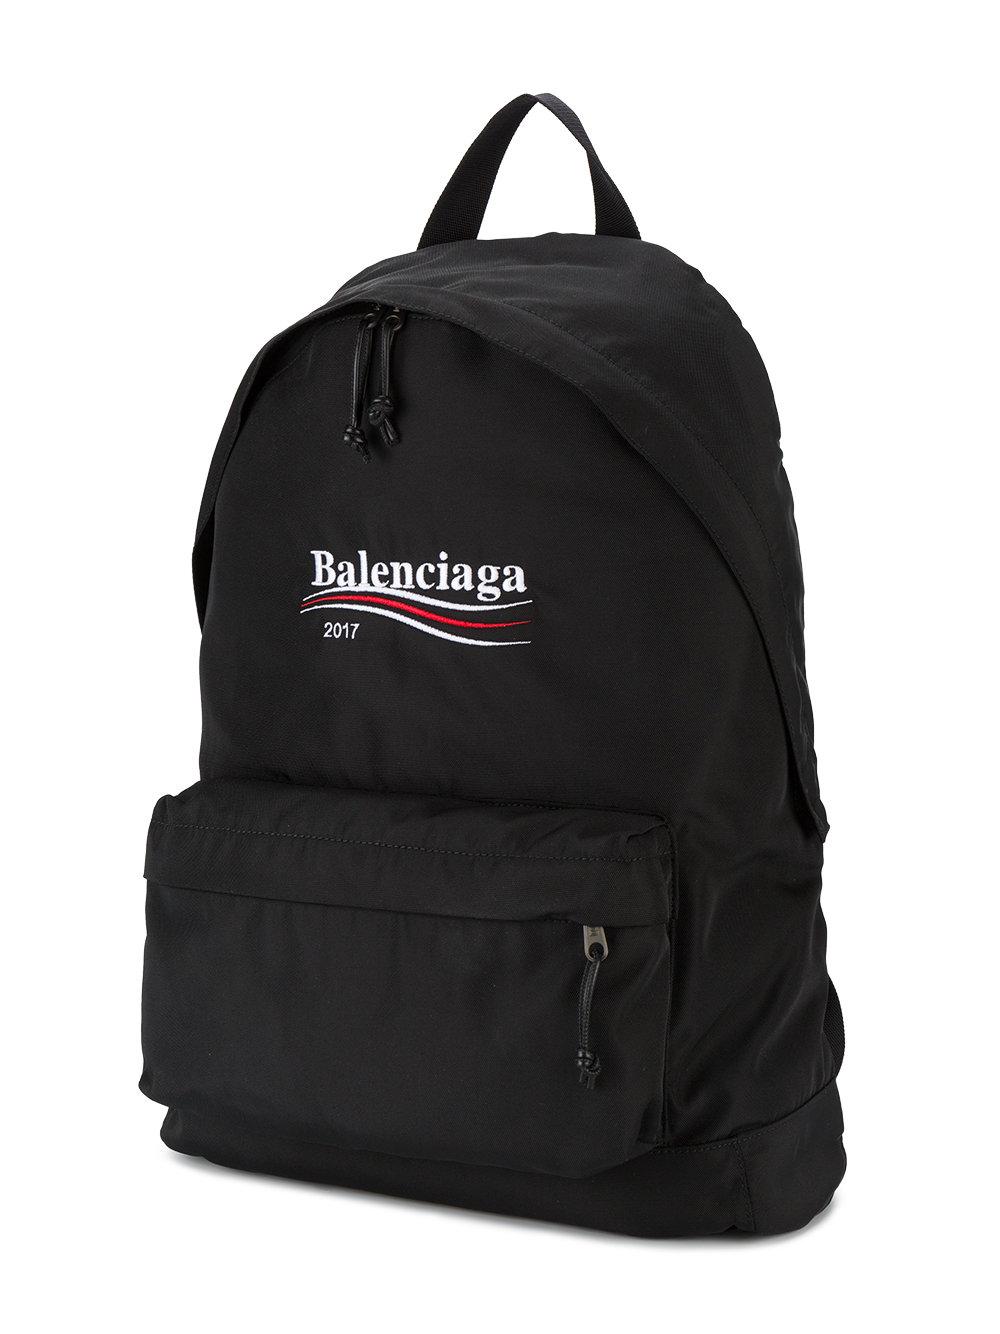 Lyst - Balenciaga Explorer Embroidered Backpack in Black for Men